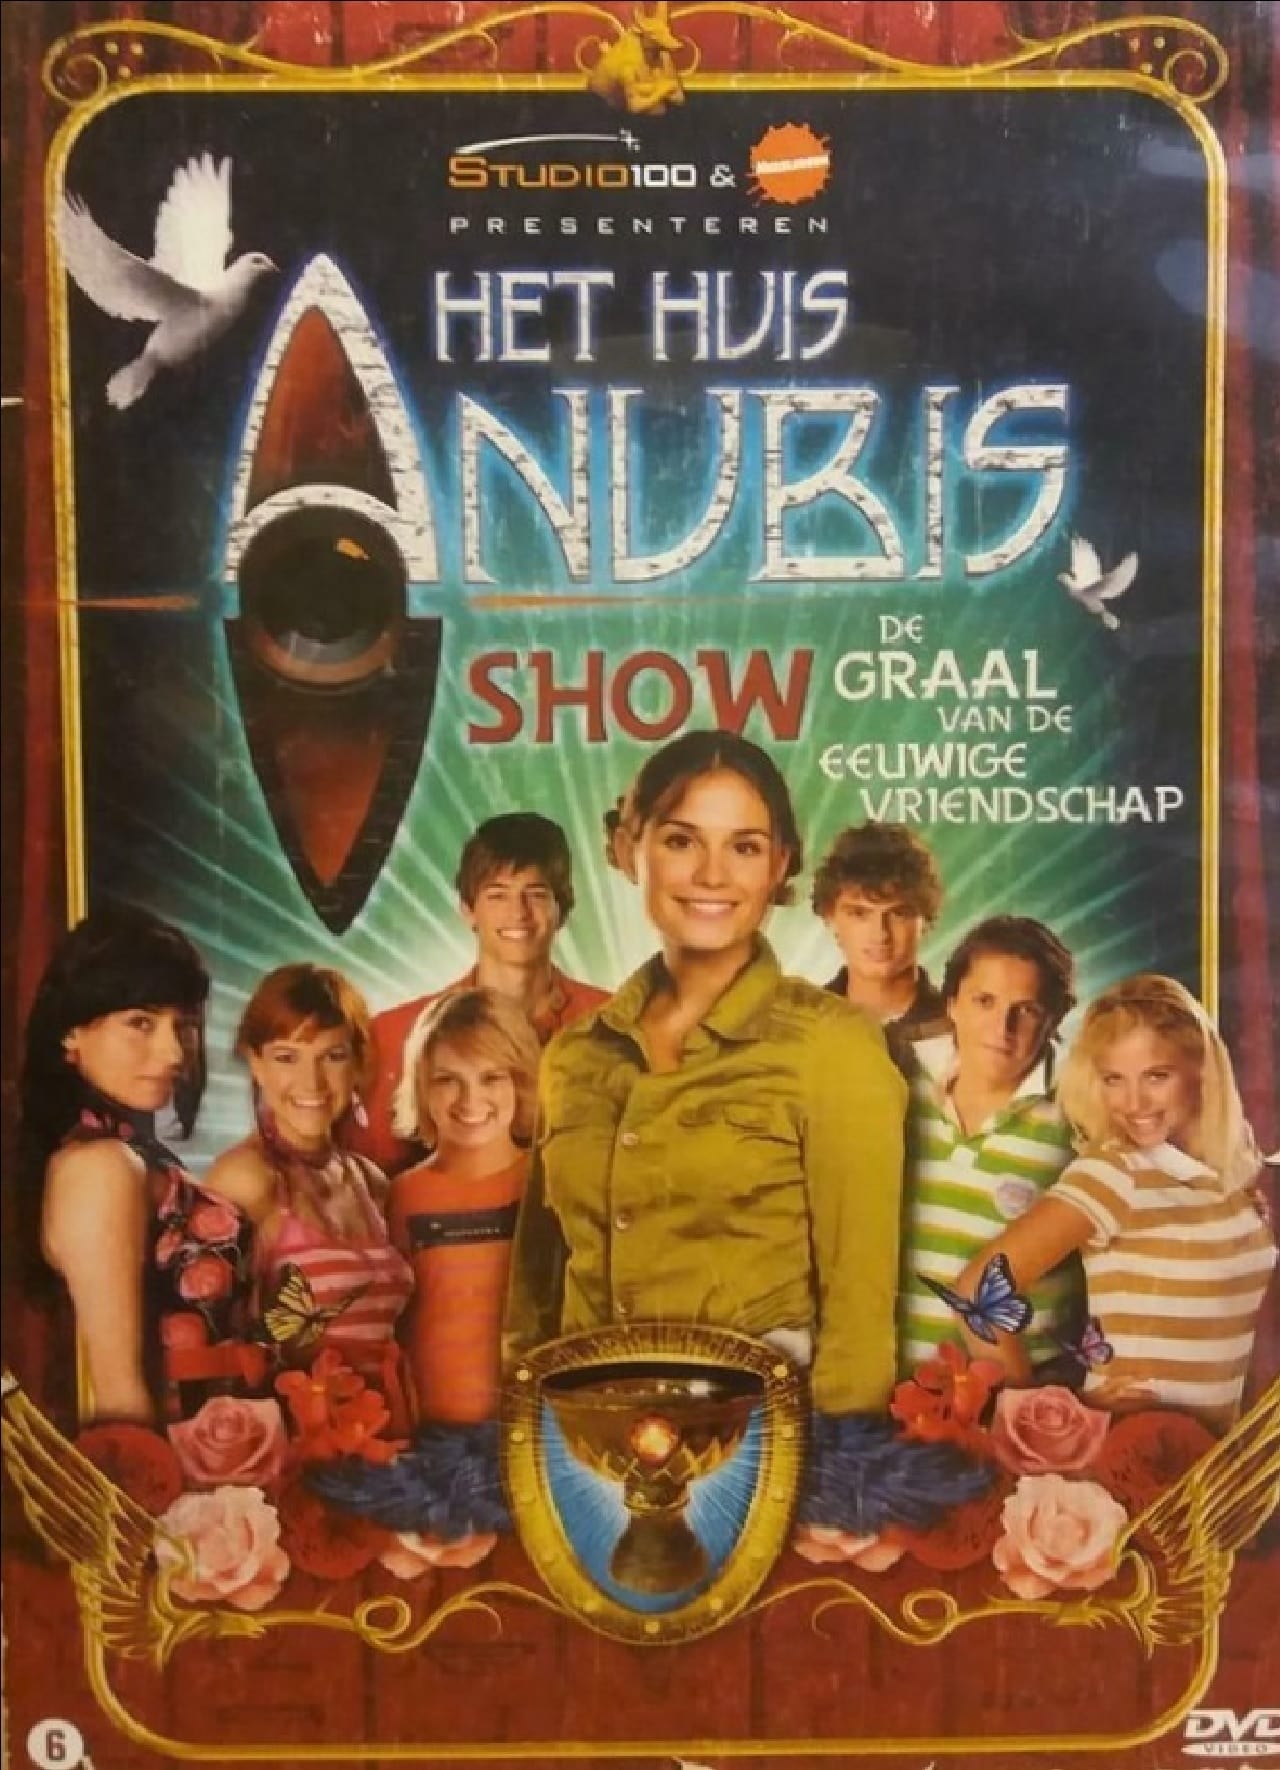 House of Anubis (NL): The Grail of Eternal Friendship